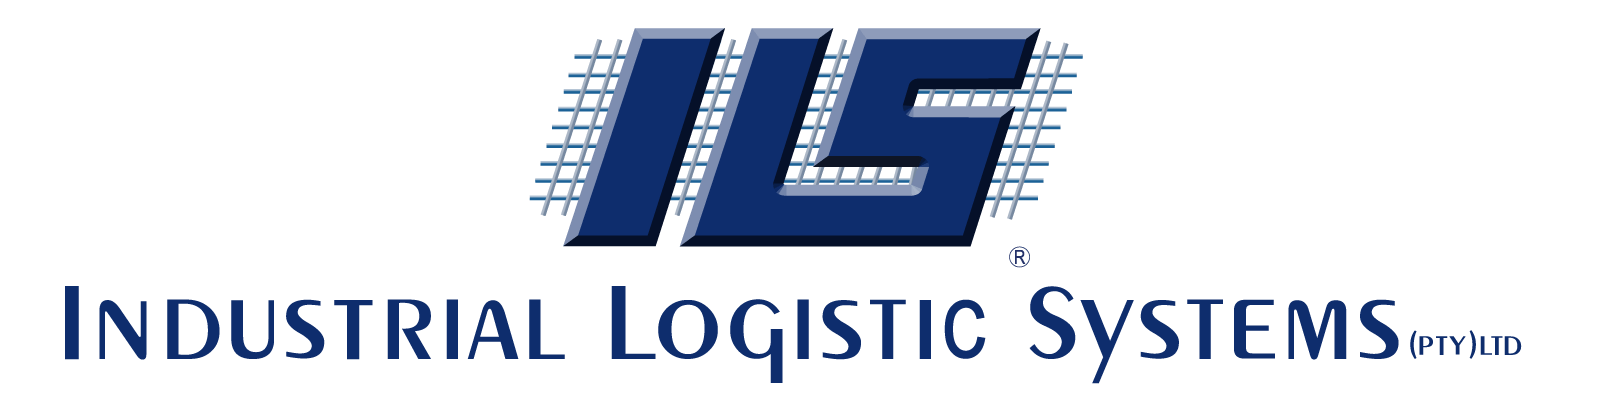 Ils Logo - ILS Logistic Systems